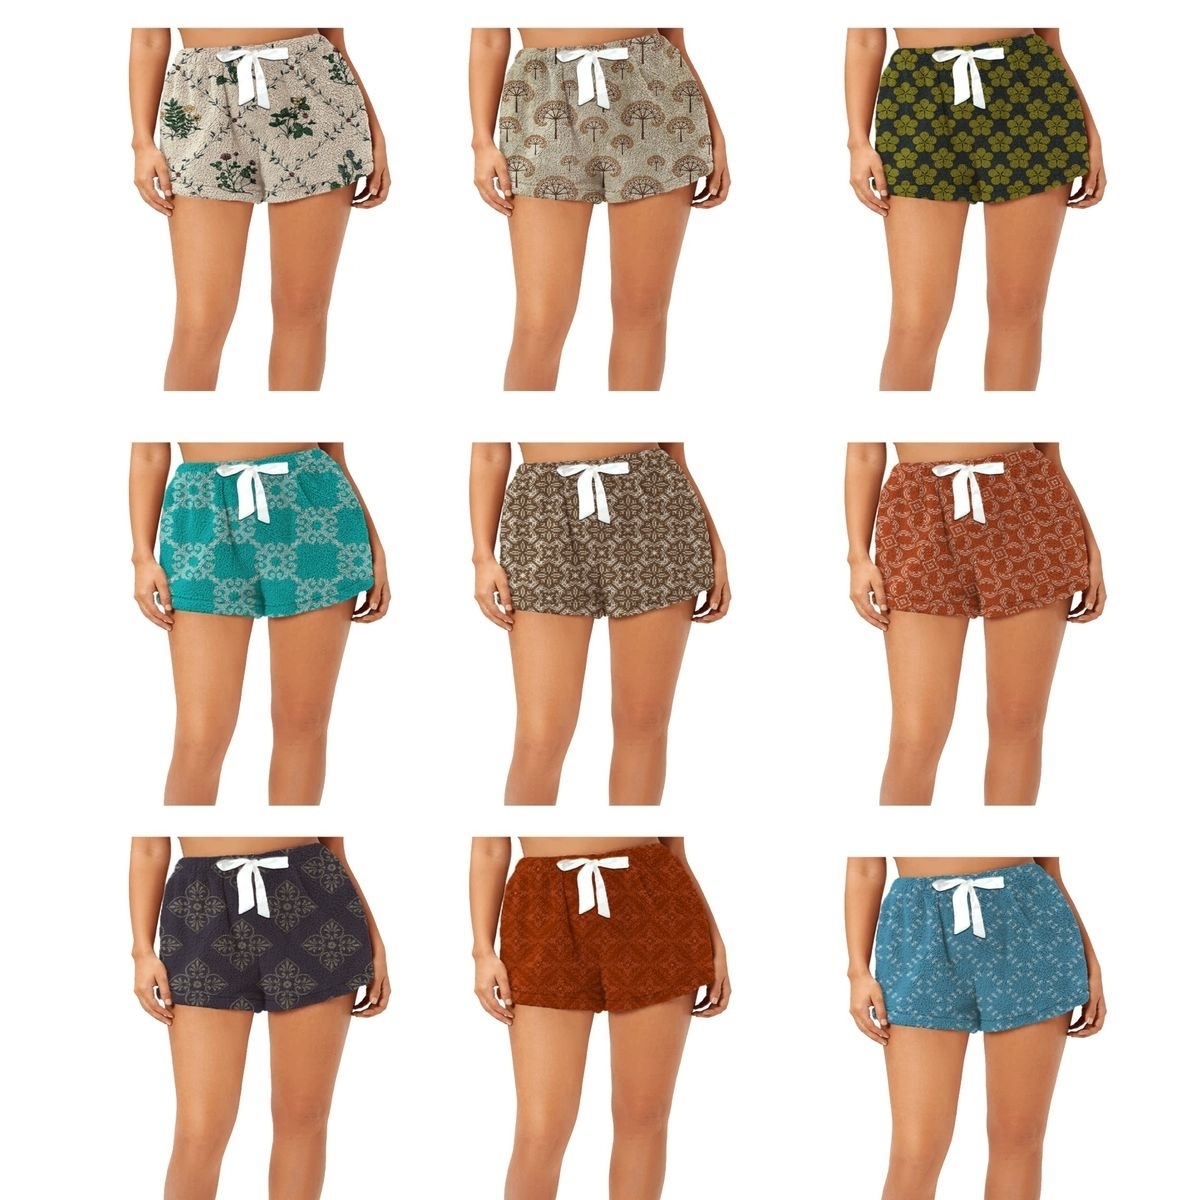 5-Pack: Women's Ultra Plush Micro-Fleece Soft Printed Pajama Shorts - Large, Tye Dye